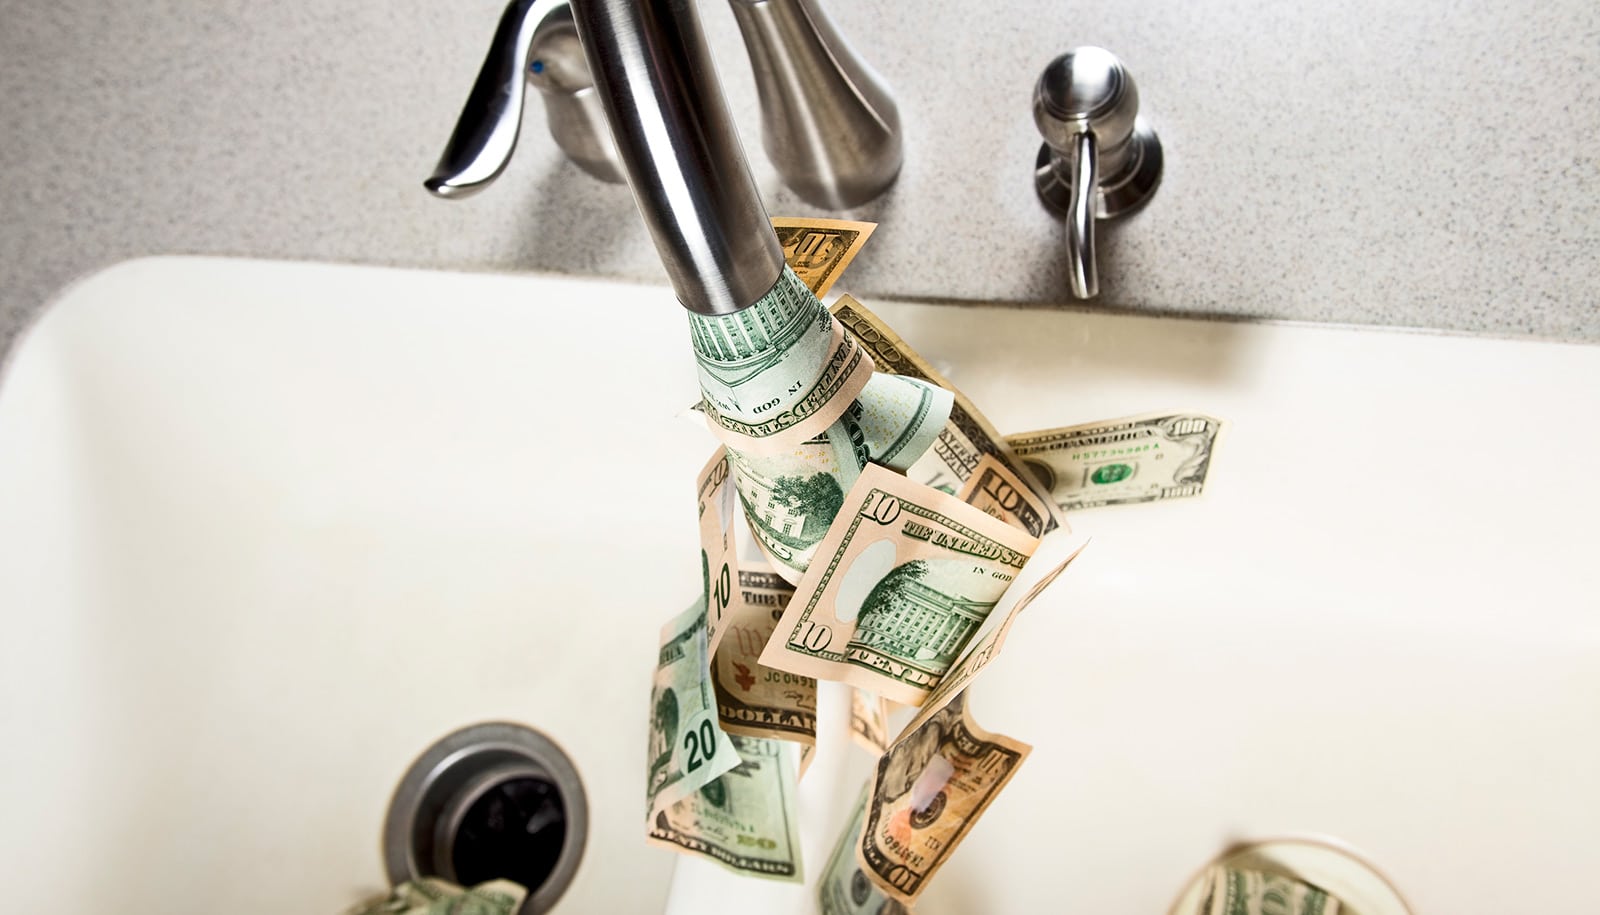 Paper money comes out of a kitchen faucet.